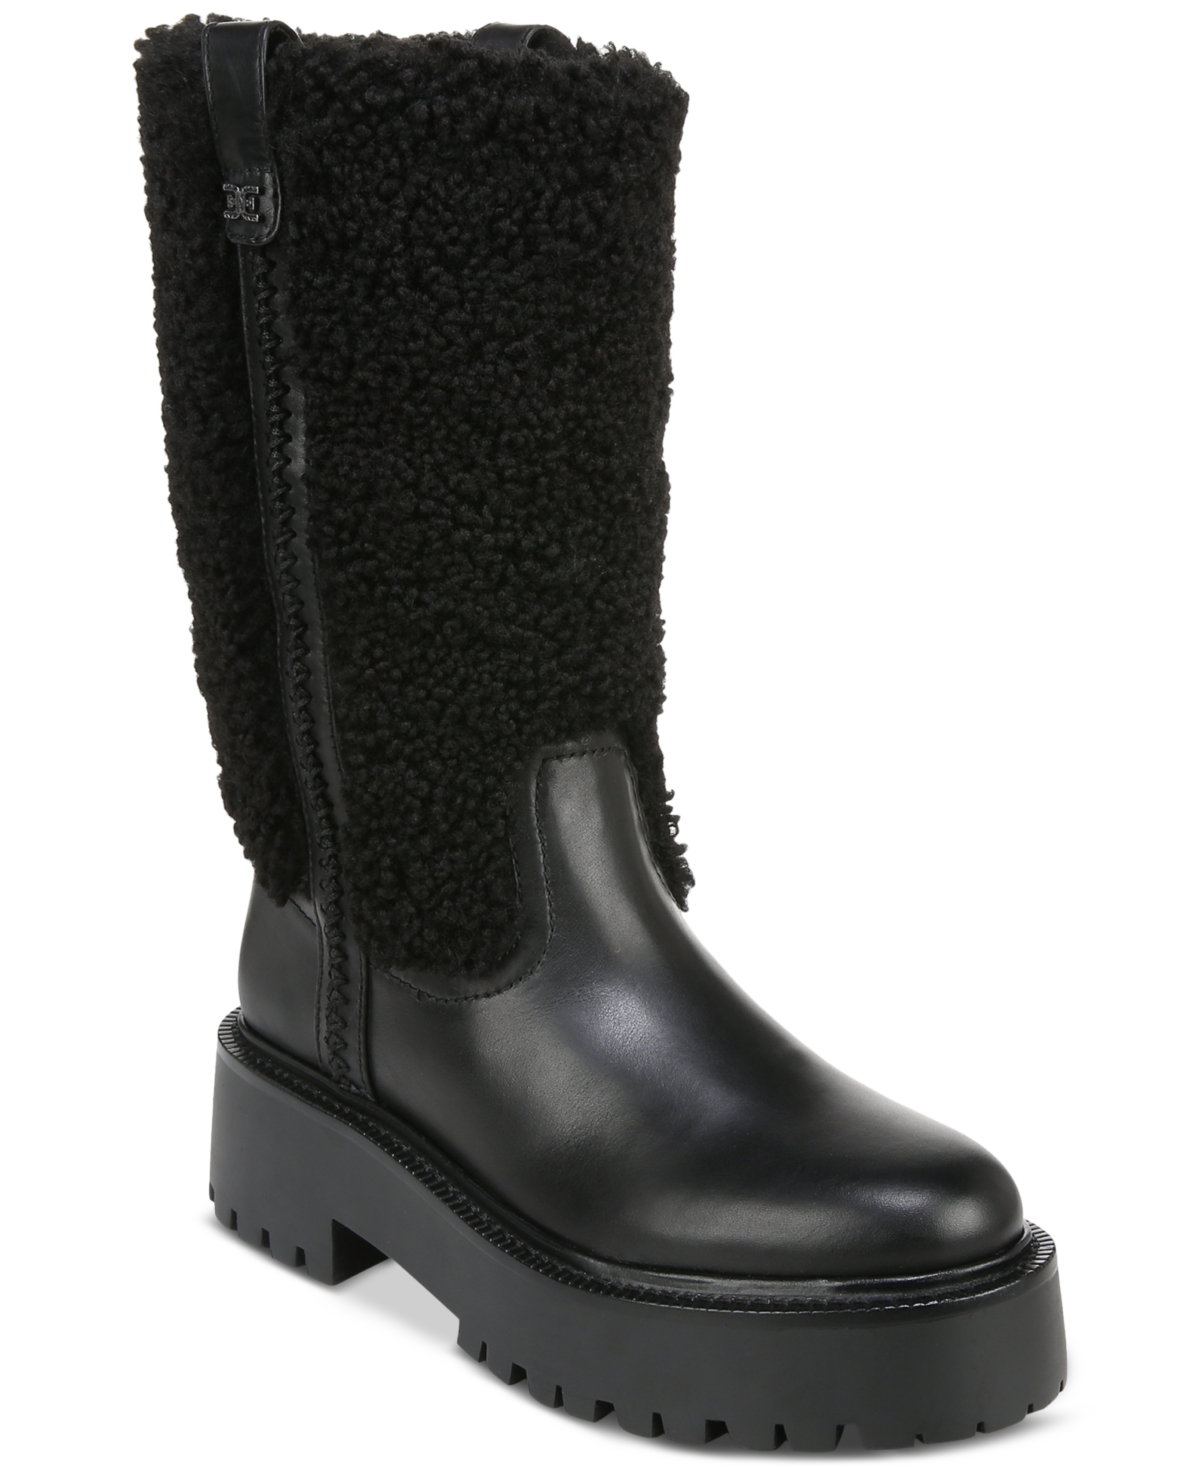 Women's Elfie Cozy Pull-On Cold-Weather Boots - Black